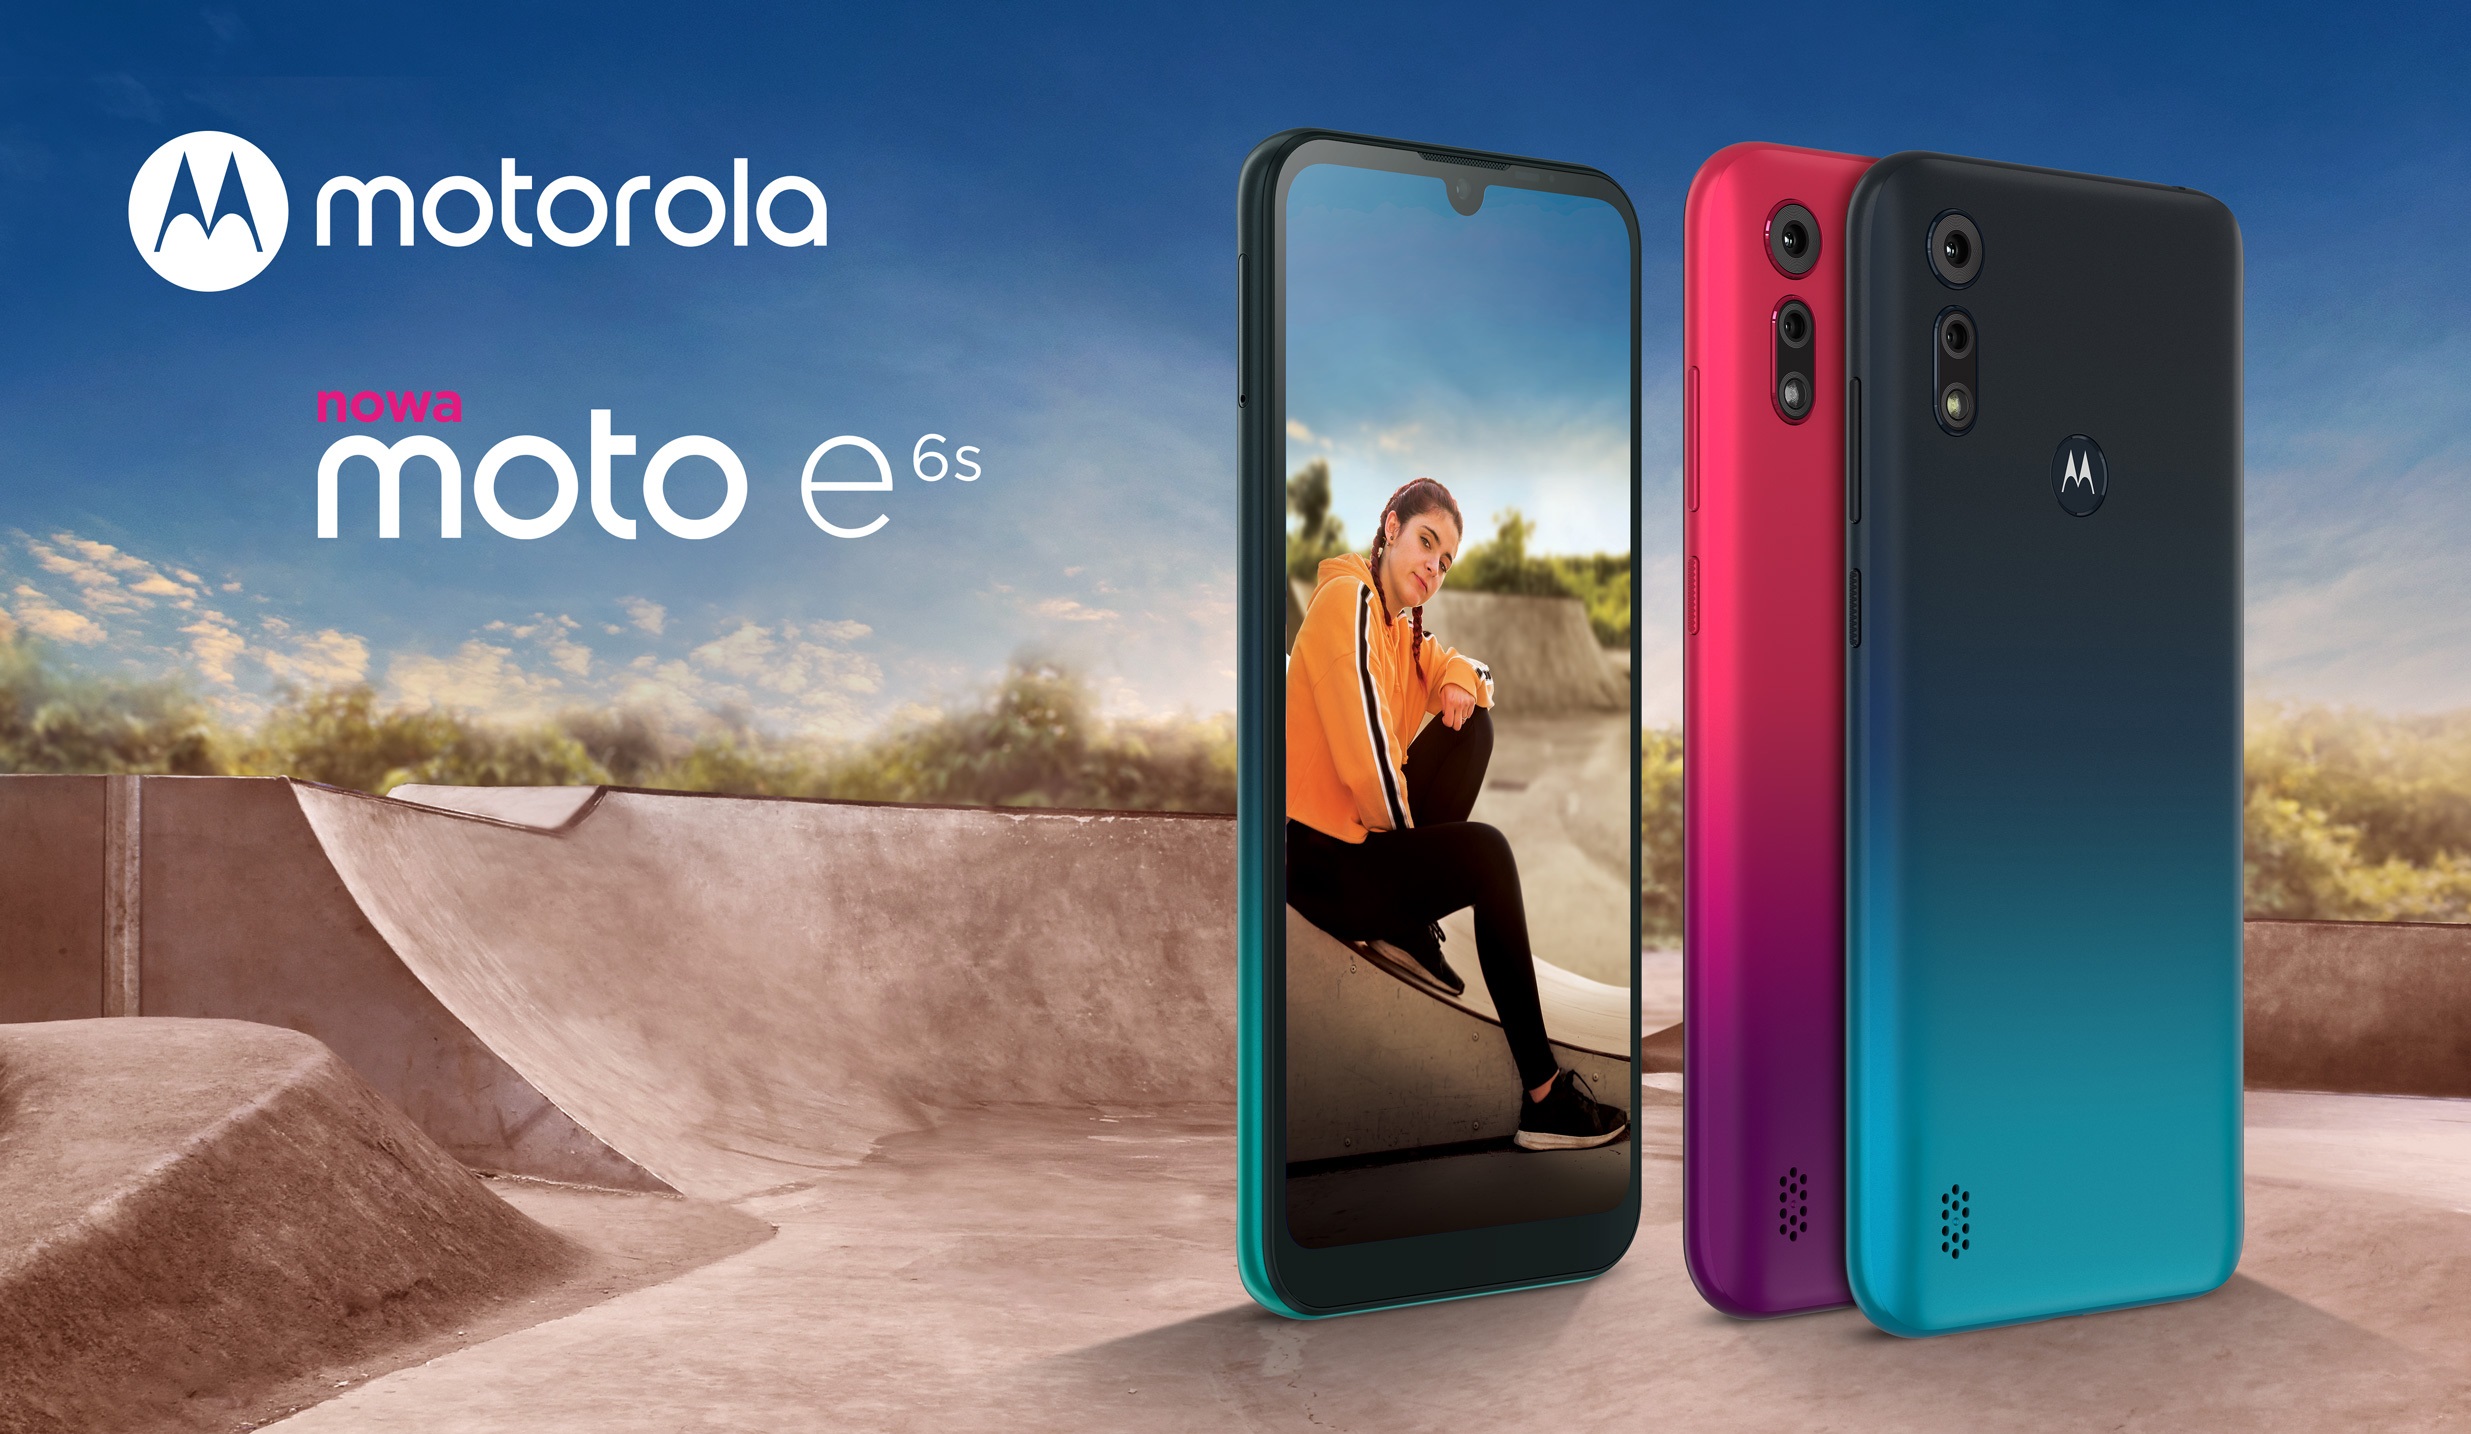 Motorola Moto E6s smartphone